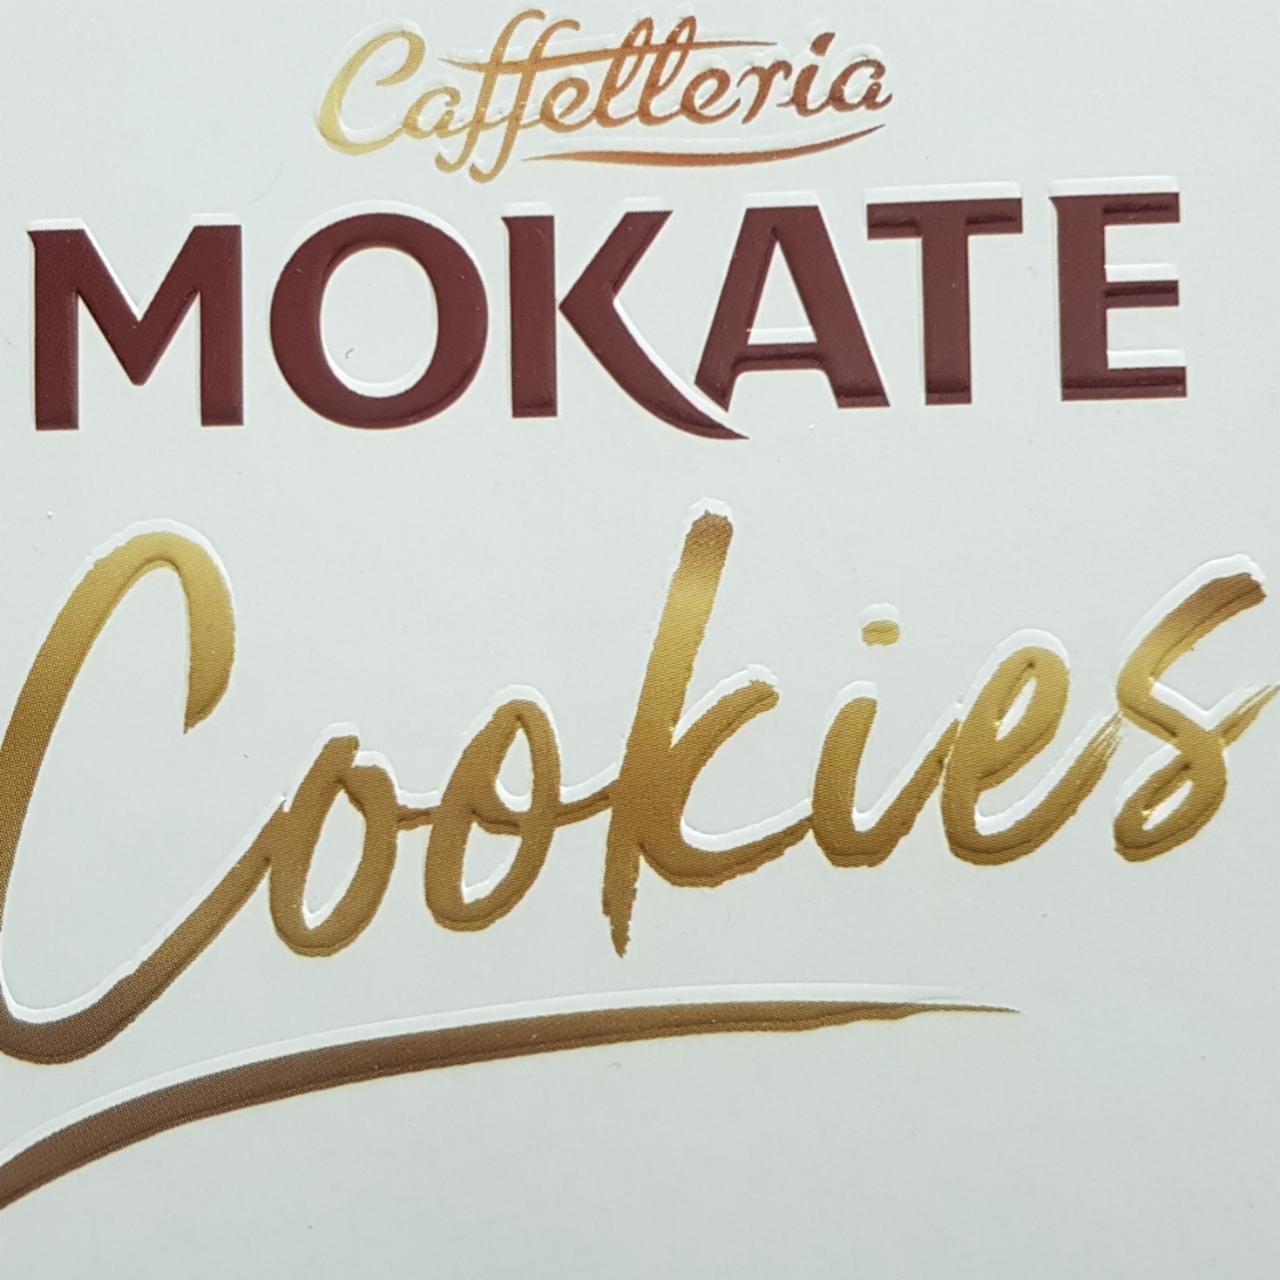 Fotografie - Mokate Cookies Caffelleria